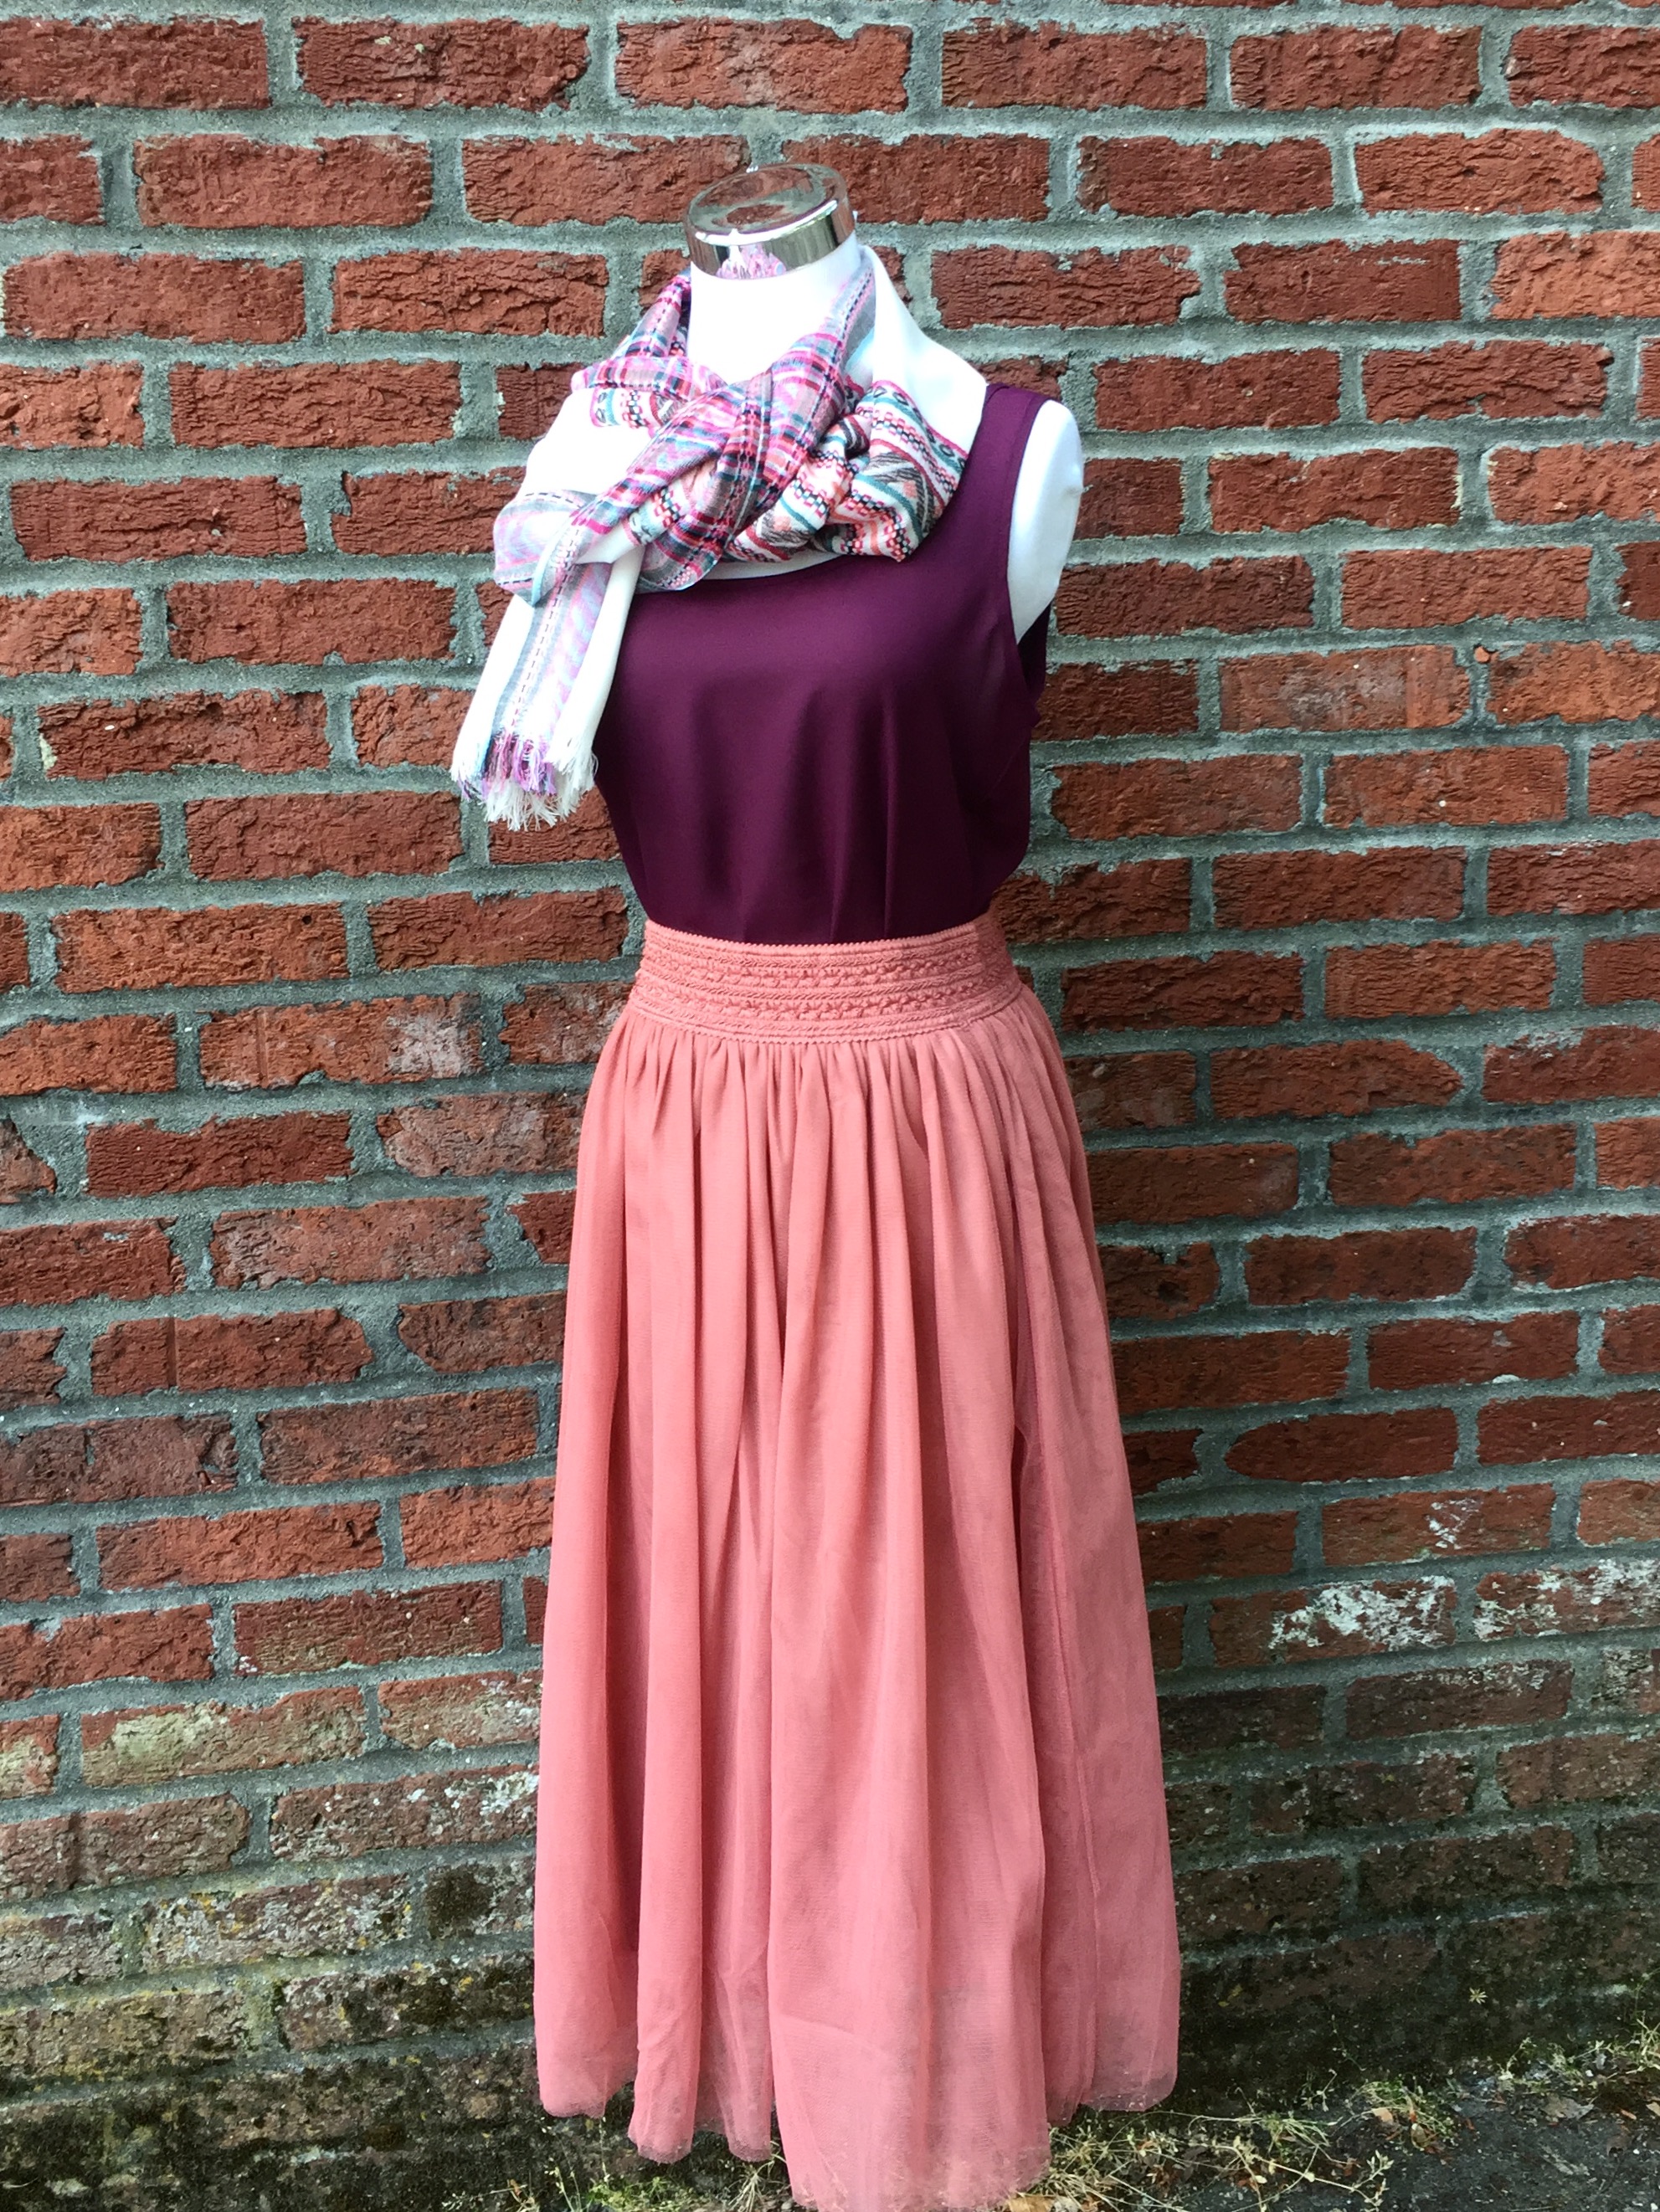 Wine Tank (Also in orange, $21) Pink Midi Skirt ($35)